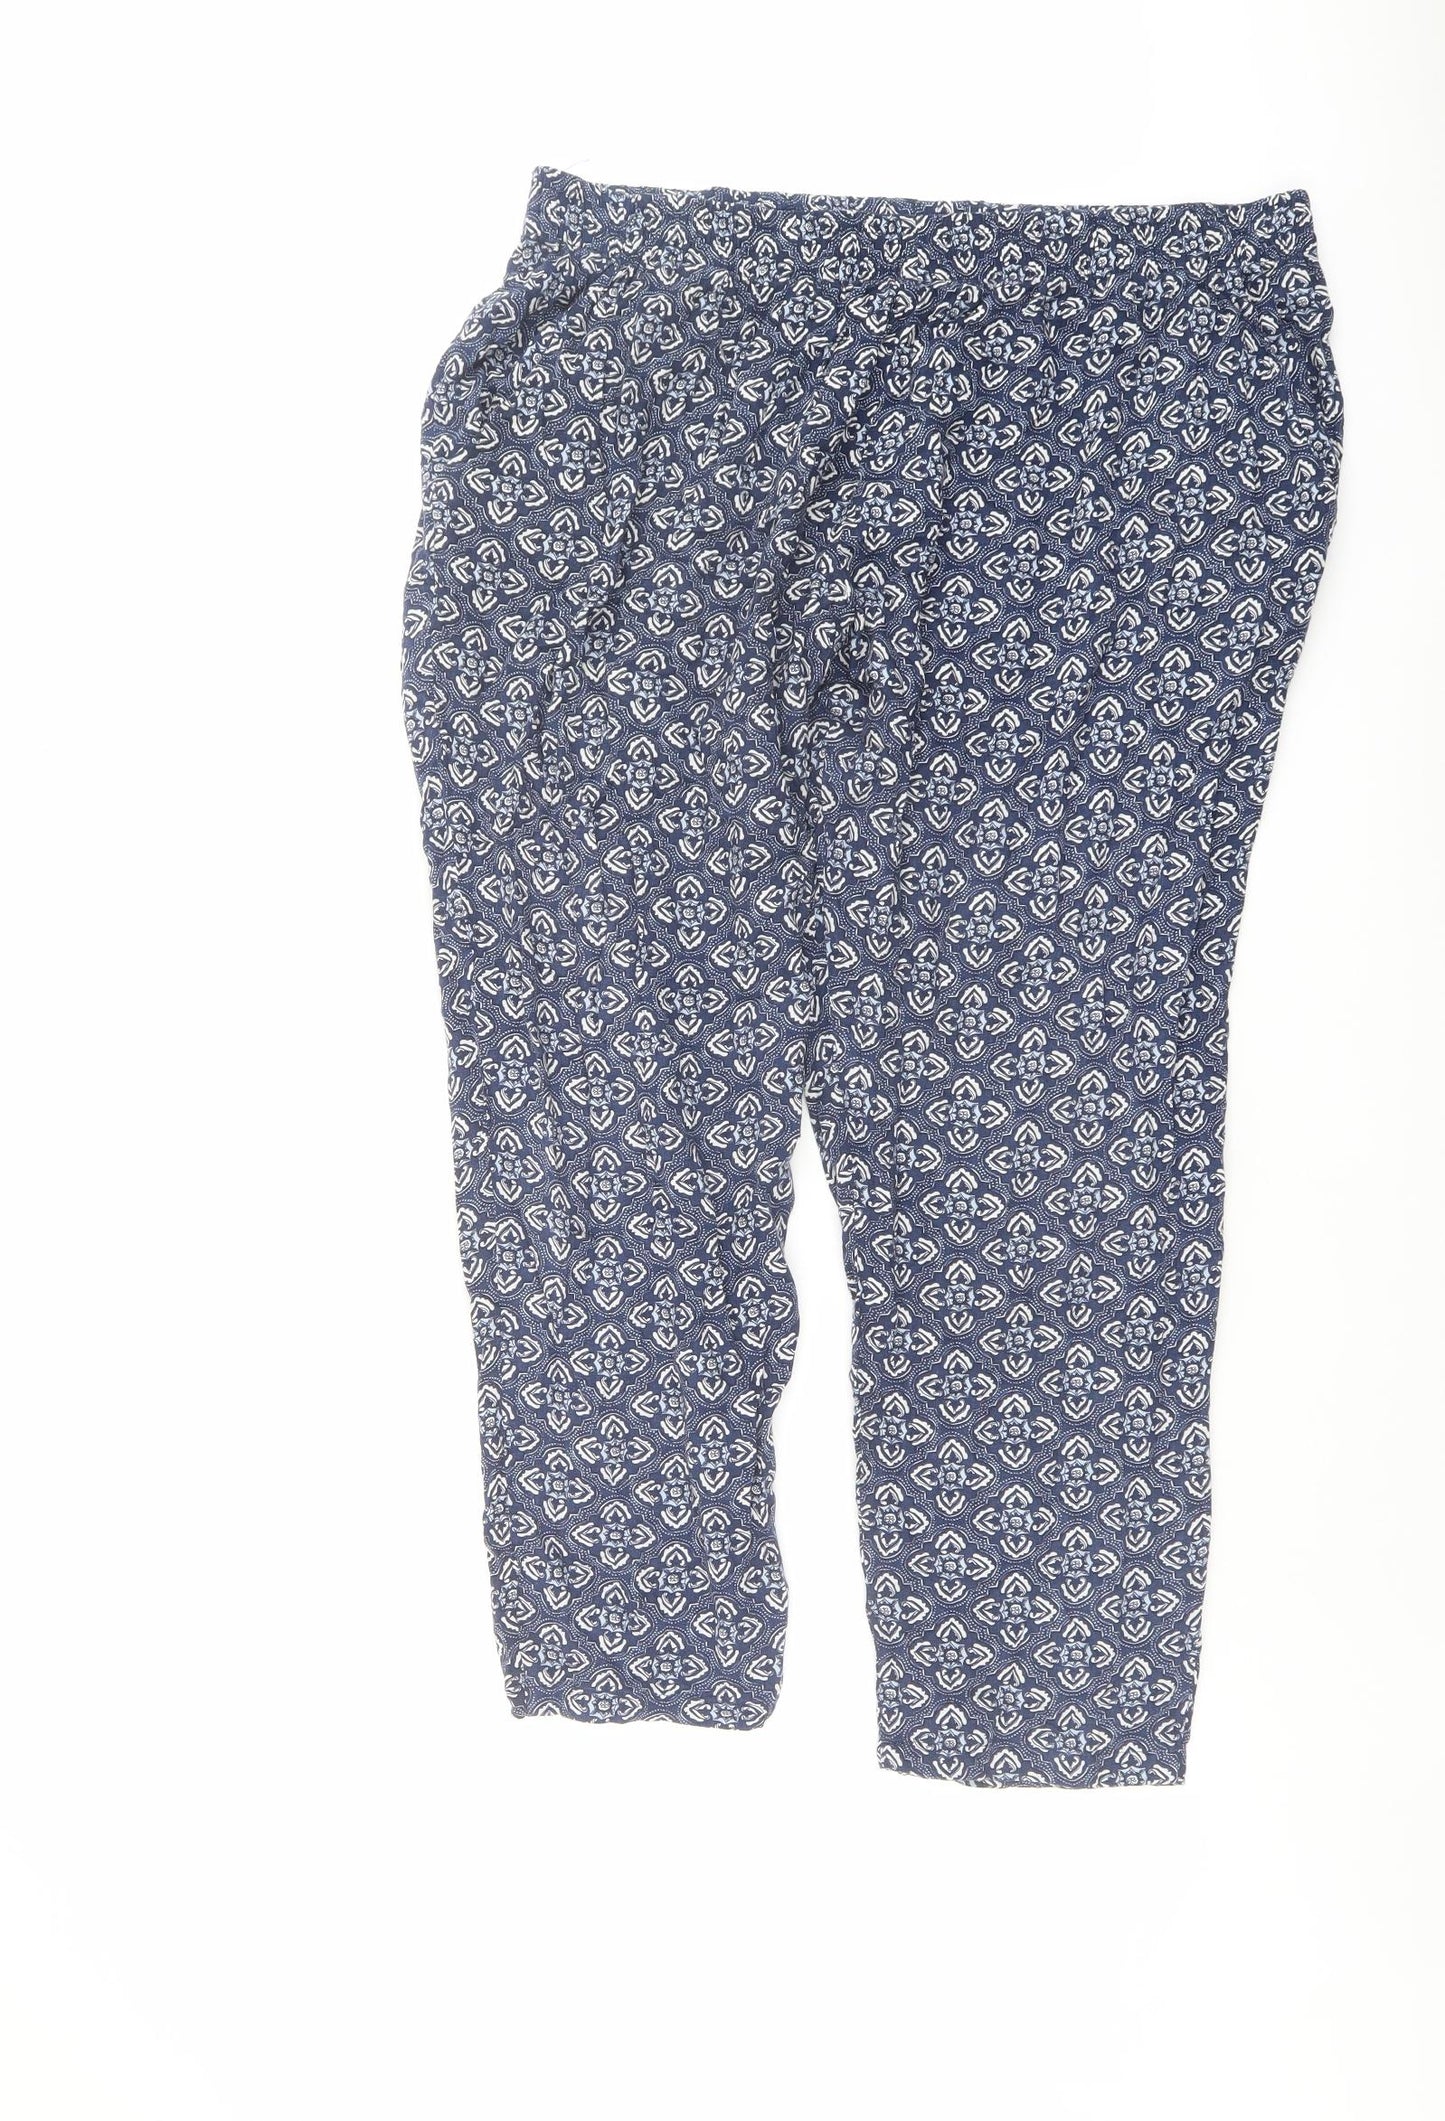 NEXT Womens Blue Geometric Viscose Trousers Size 16 L27 in Regular